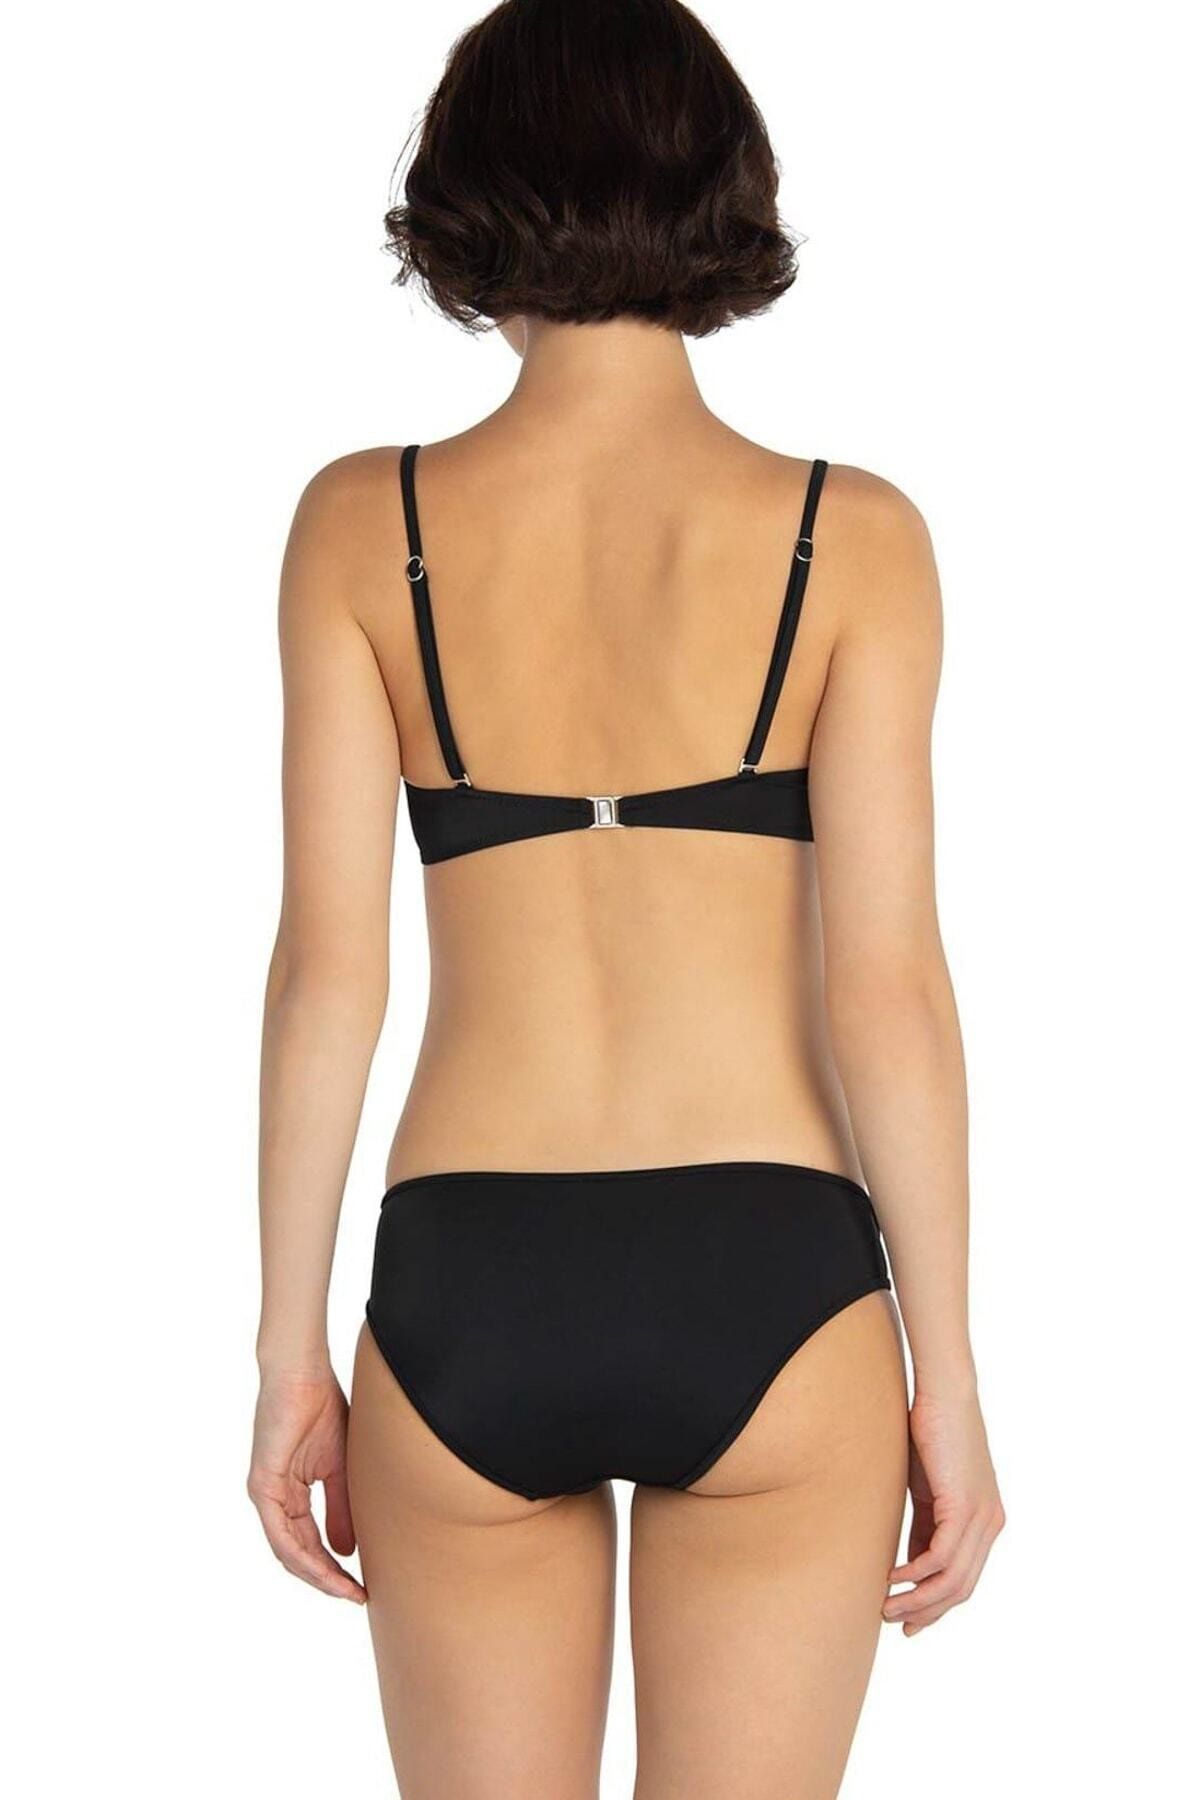 Dagi Women's Black Lace Bikini Set B0119y0030 - Trendyol